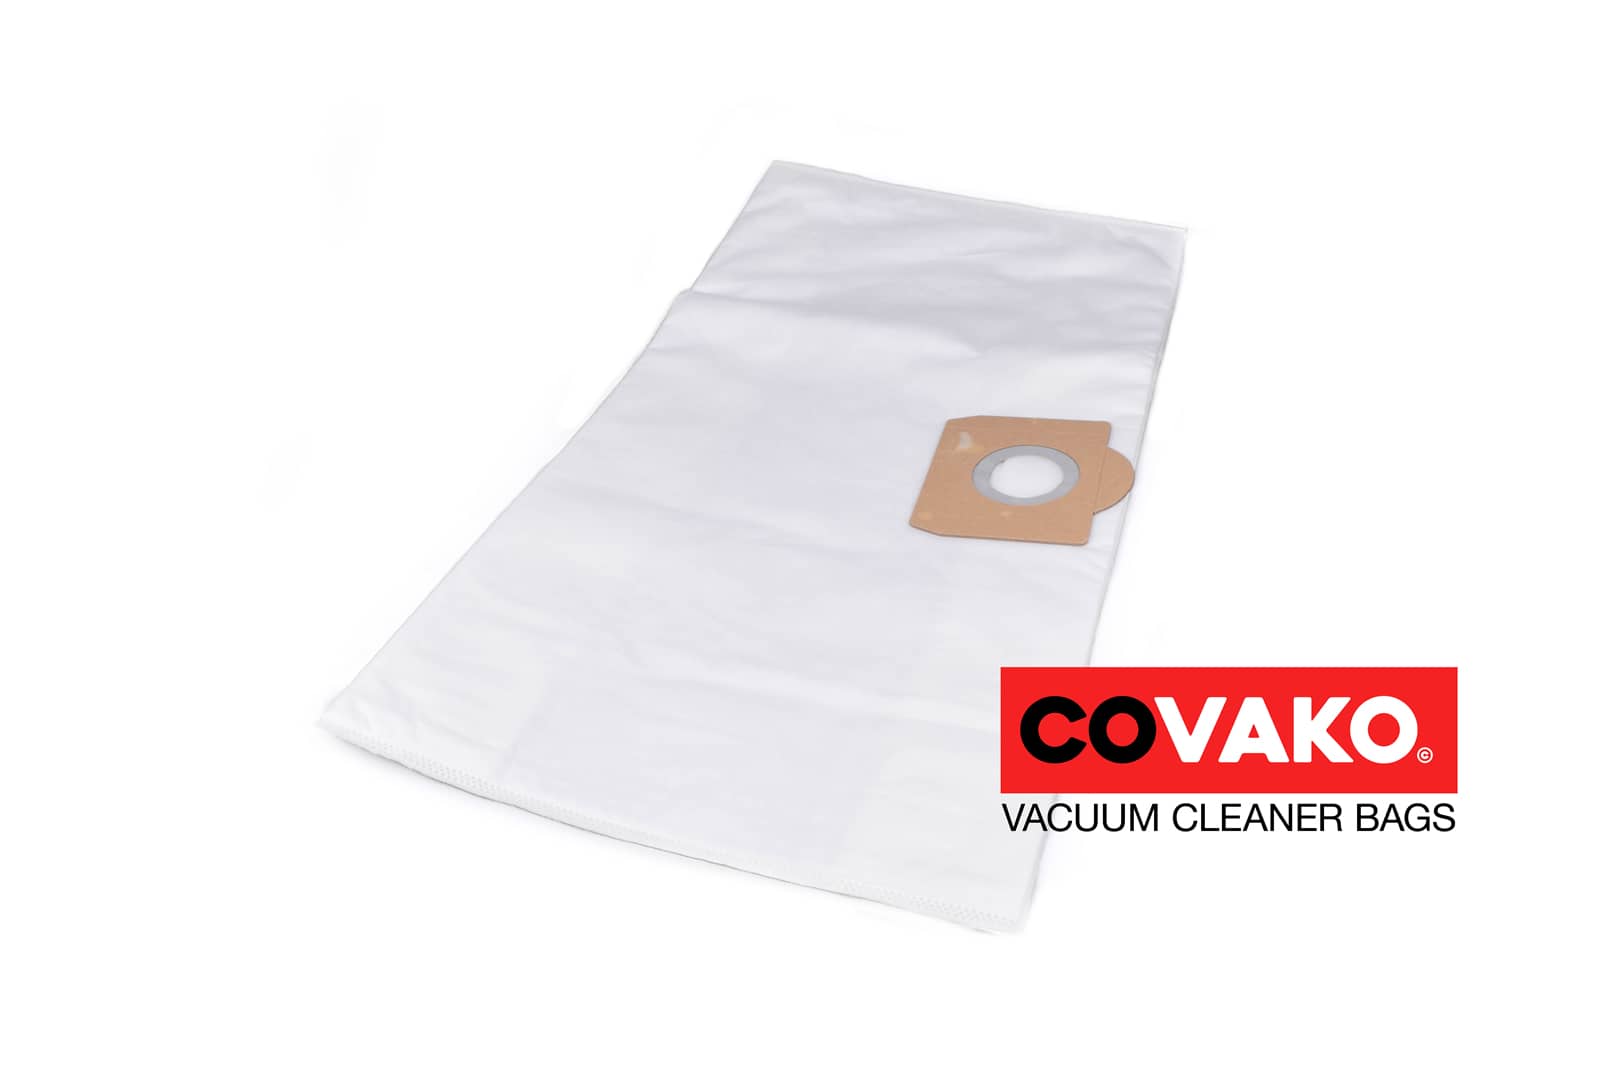 Fakir GS 35 / Synthesis - Fakir vacuum cleaner bags